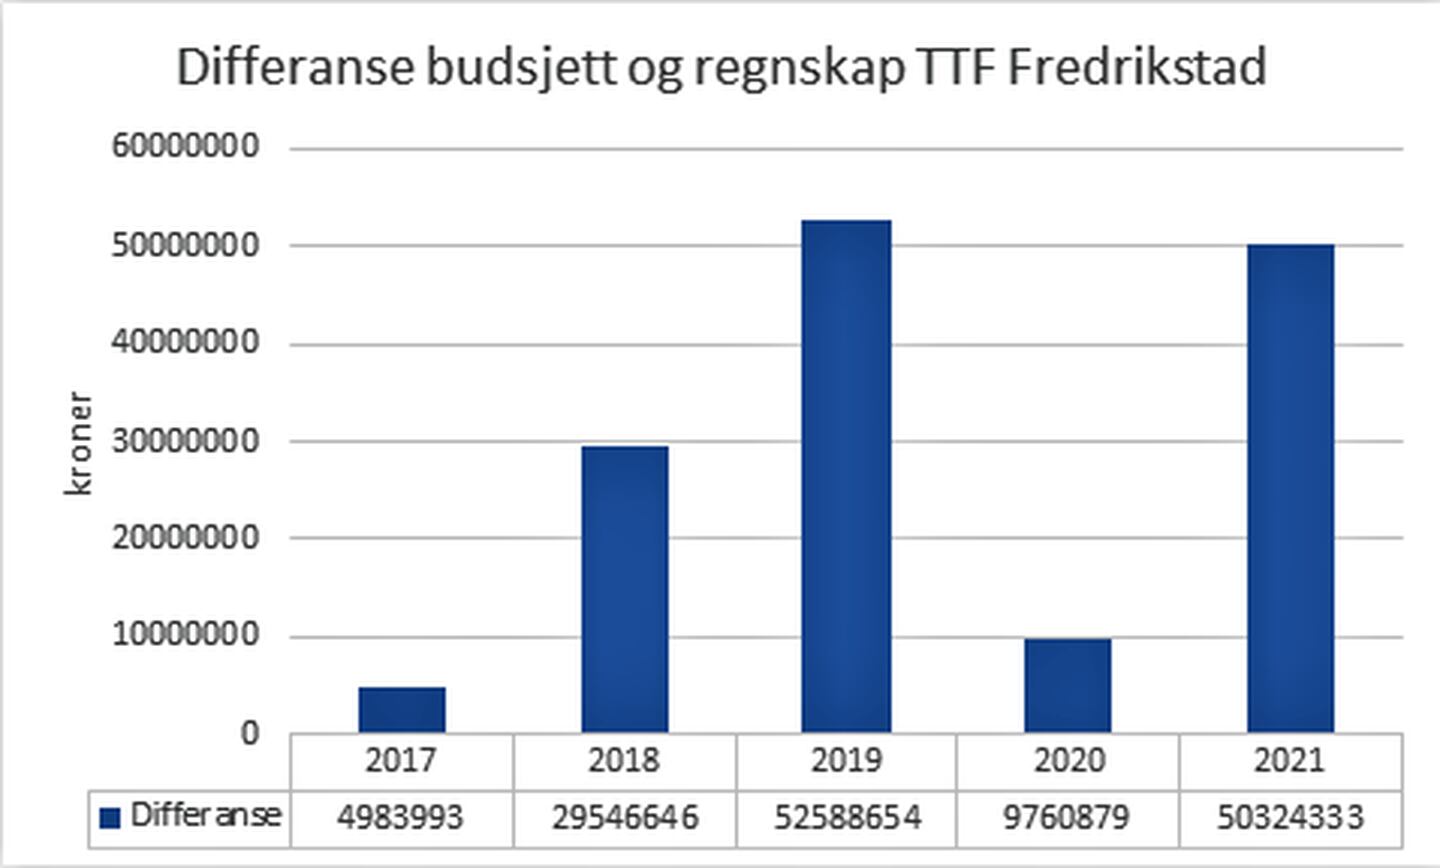 TTF Fredrikstad